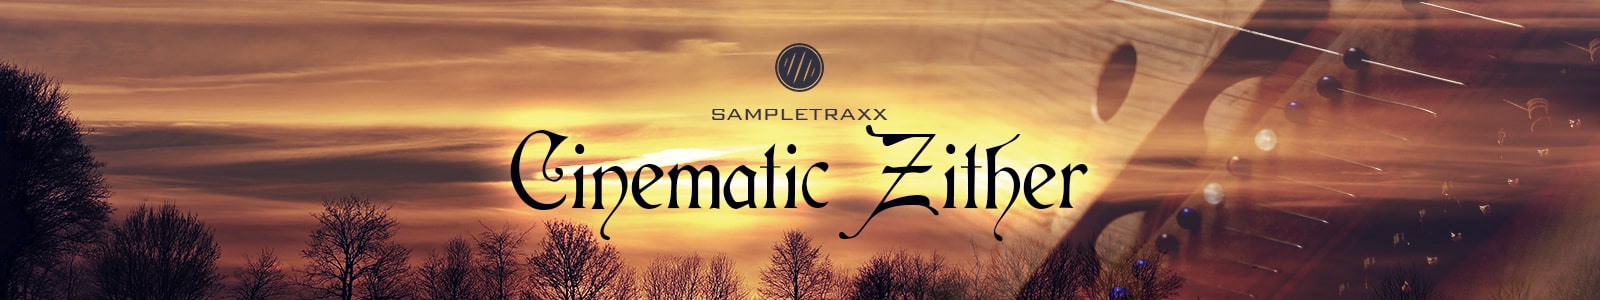 sampletraxx cinematic zither